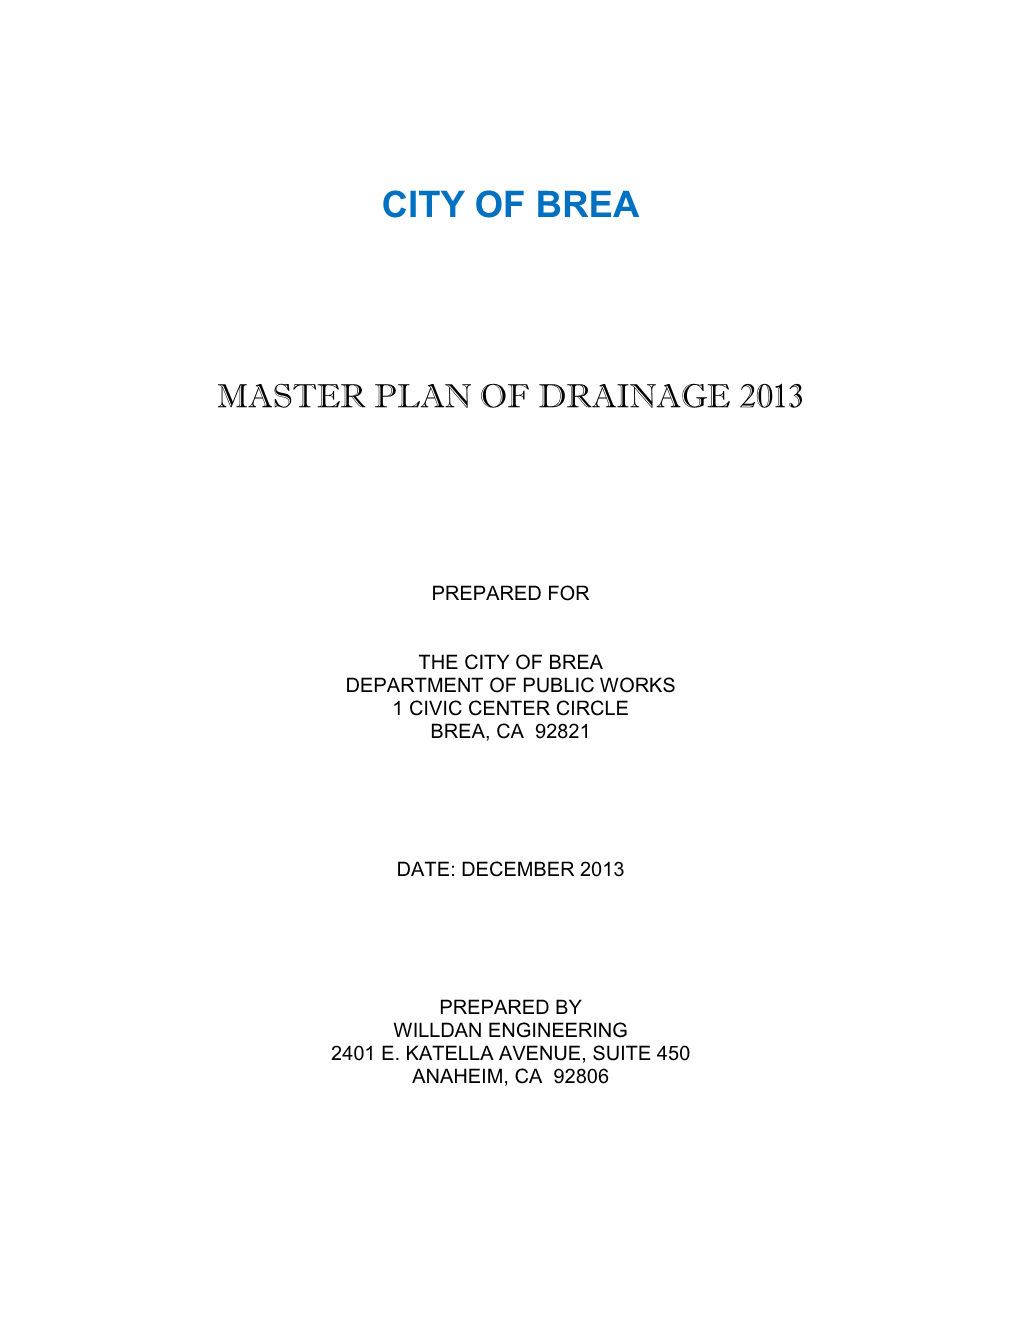 Master Plan of Drainage 2013